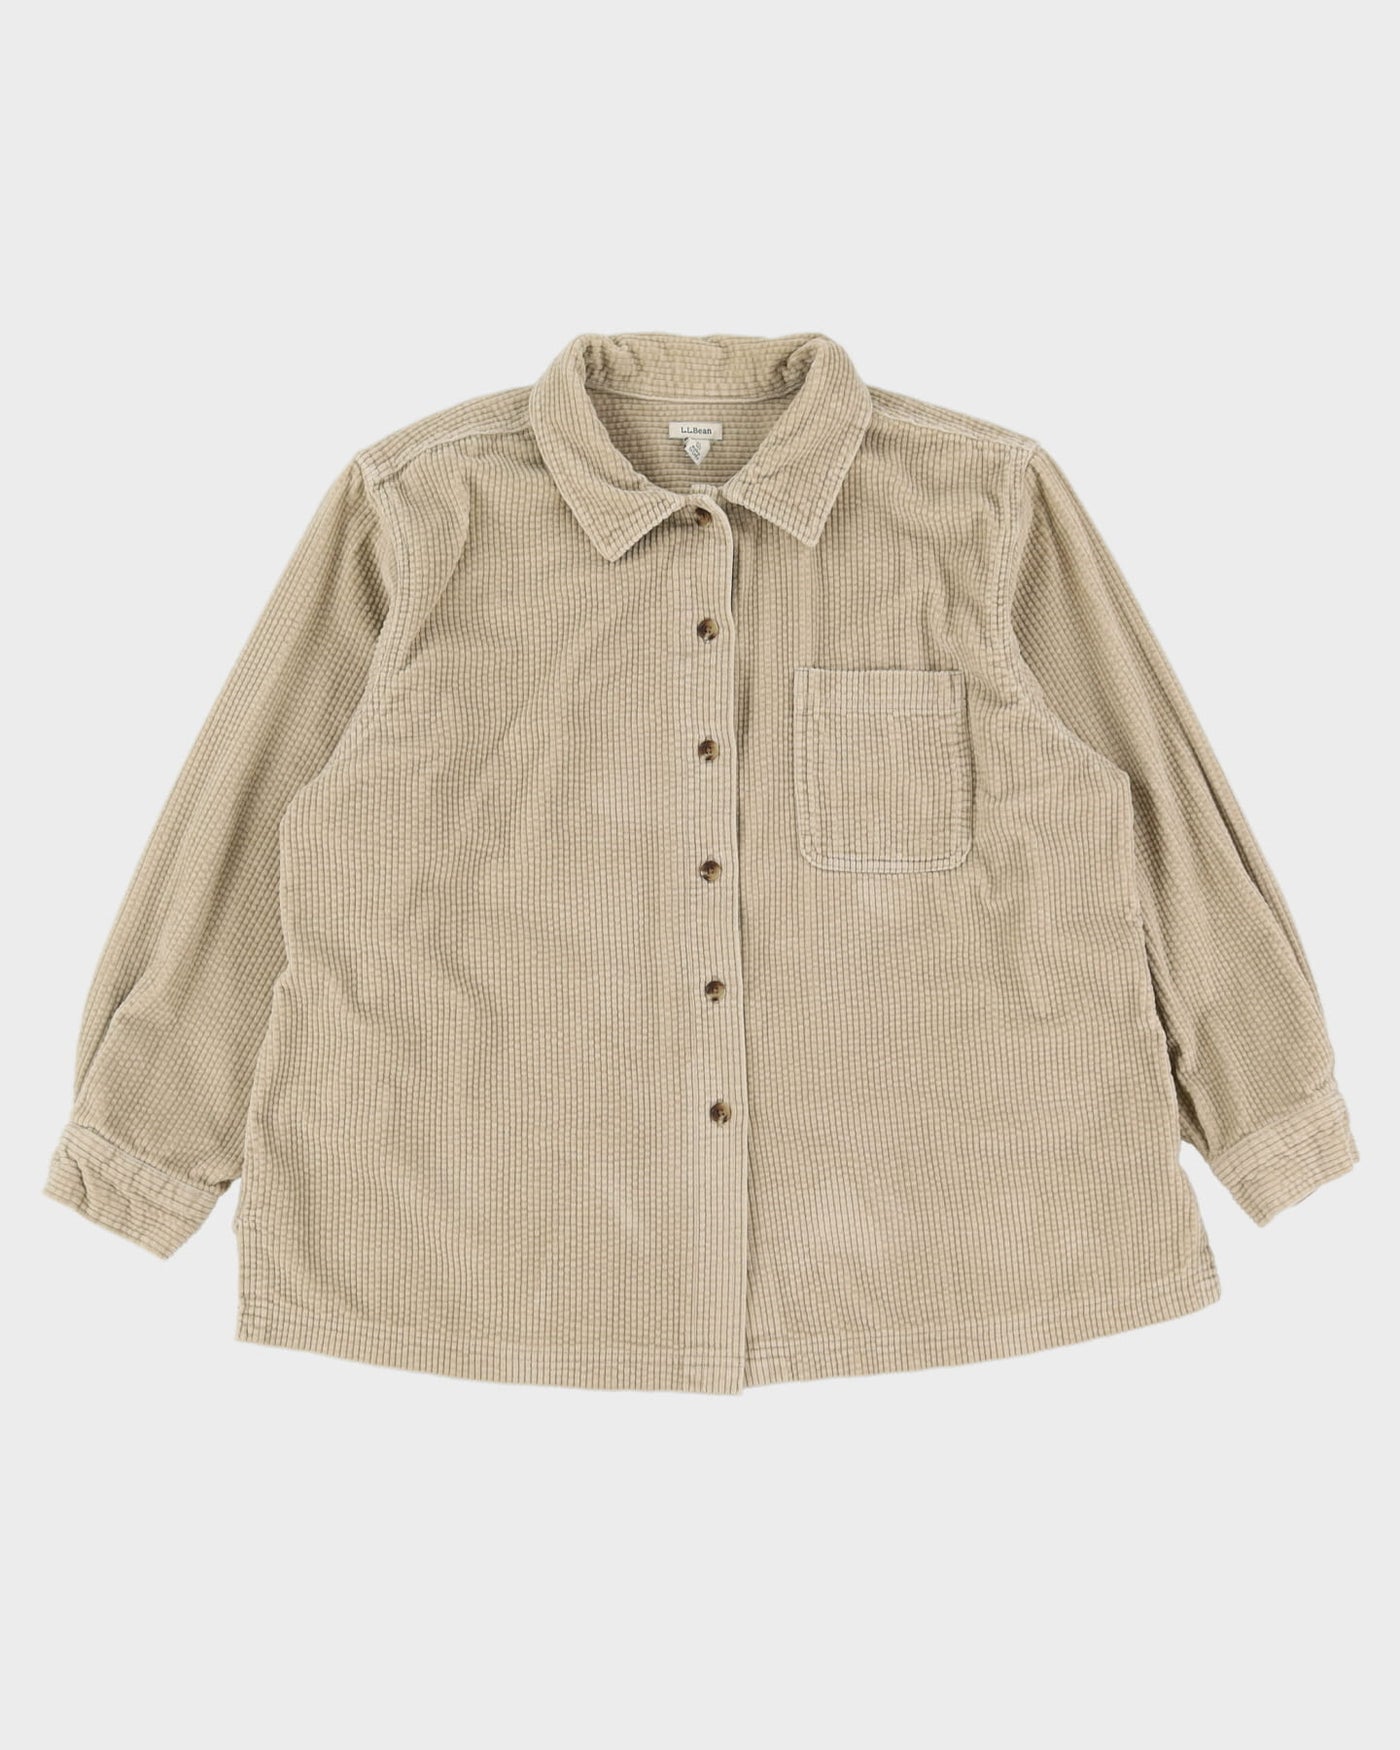 L.L. Bean Beige Cord Over-Shirt Jacket - XL